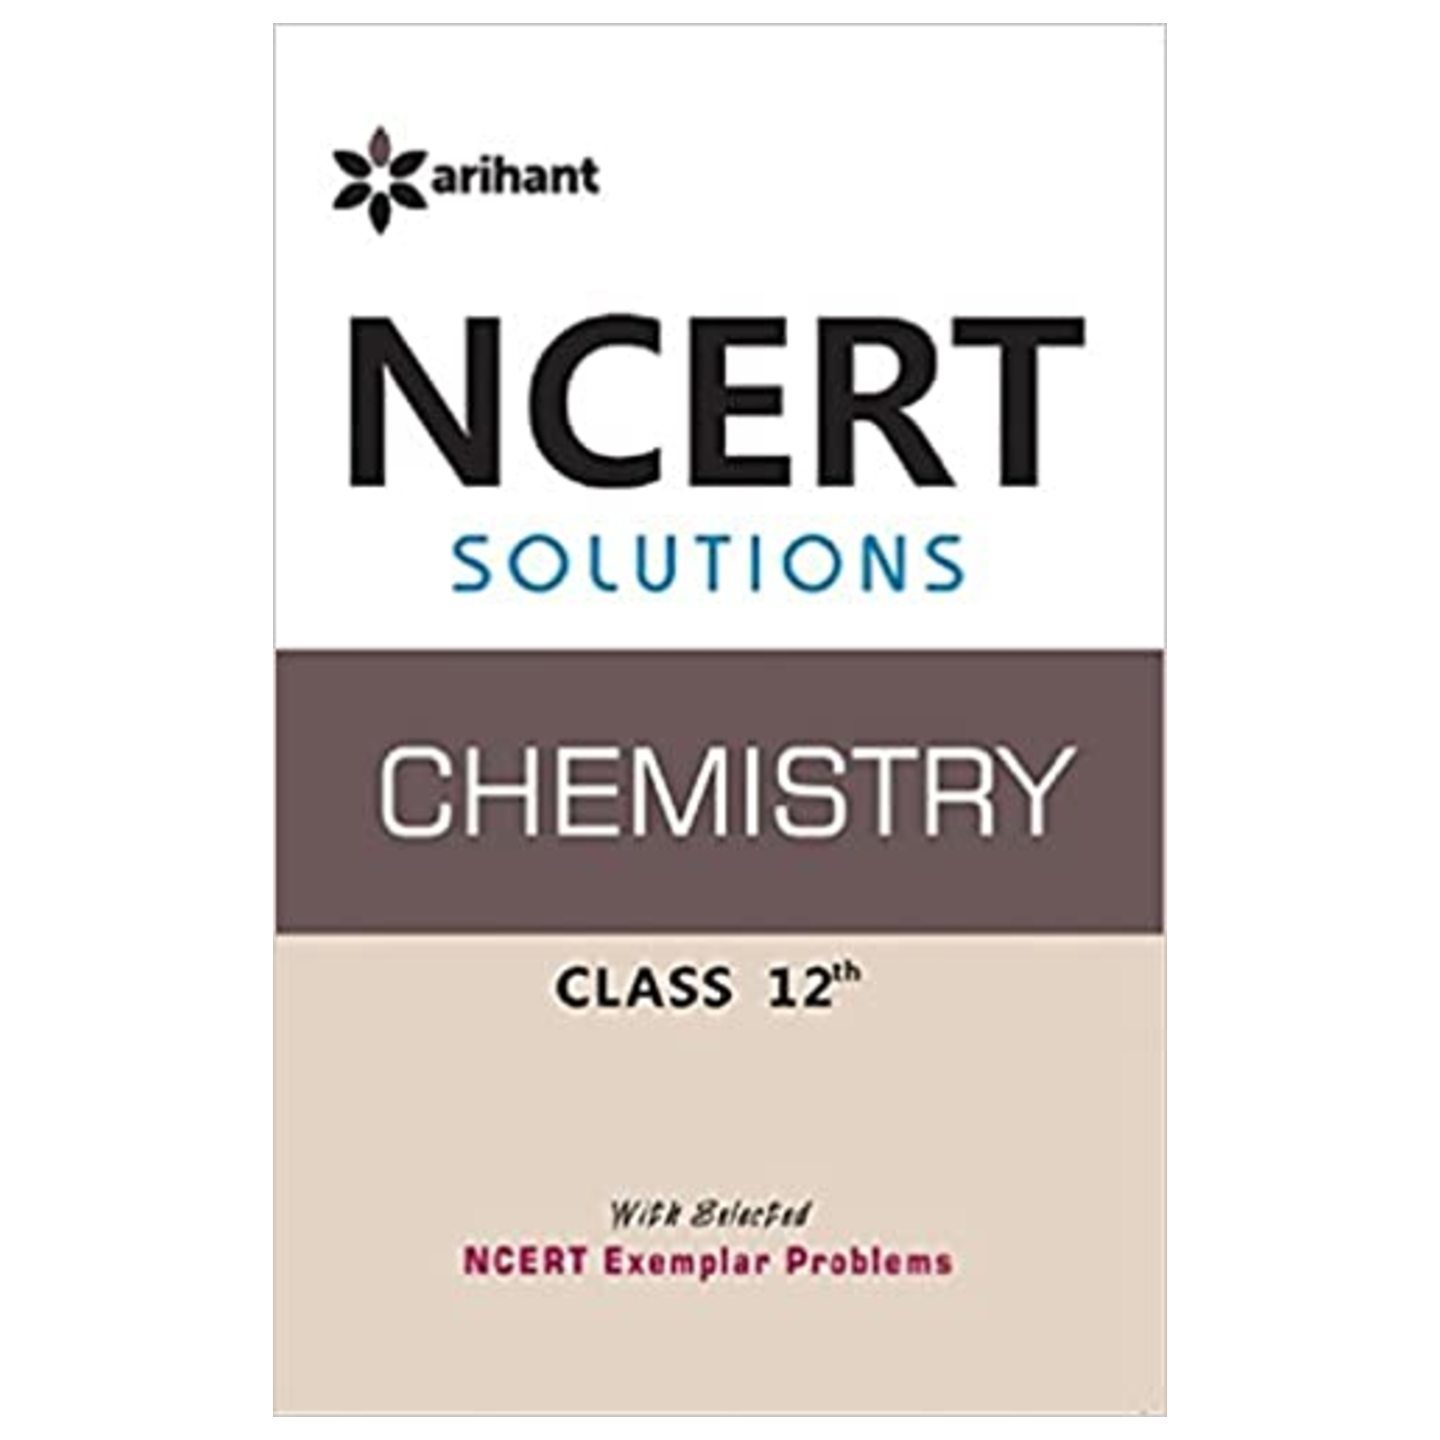 NCERT Solutions Chemistry 12th ARIHANT